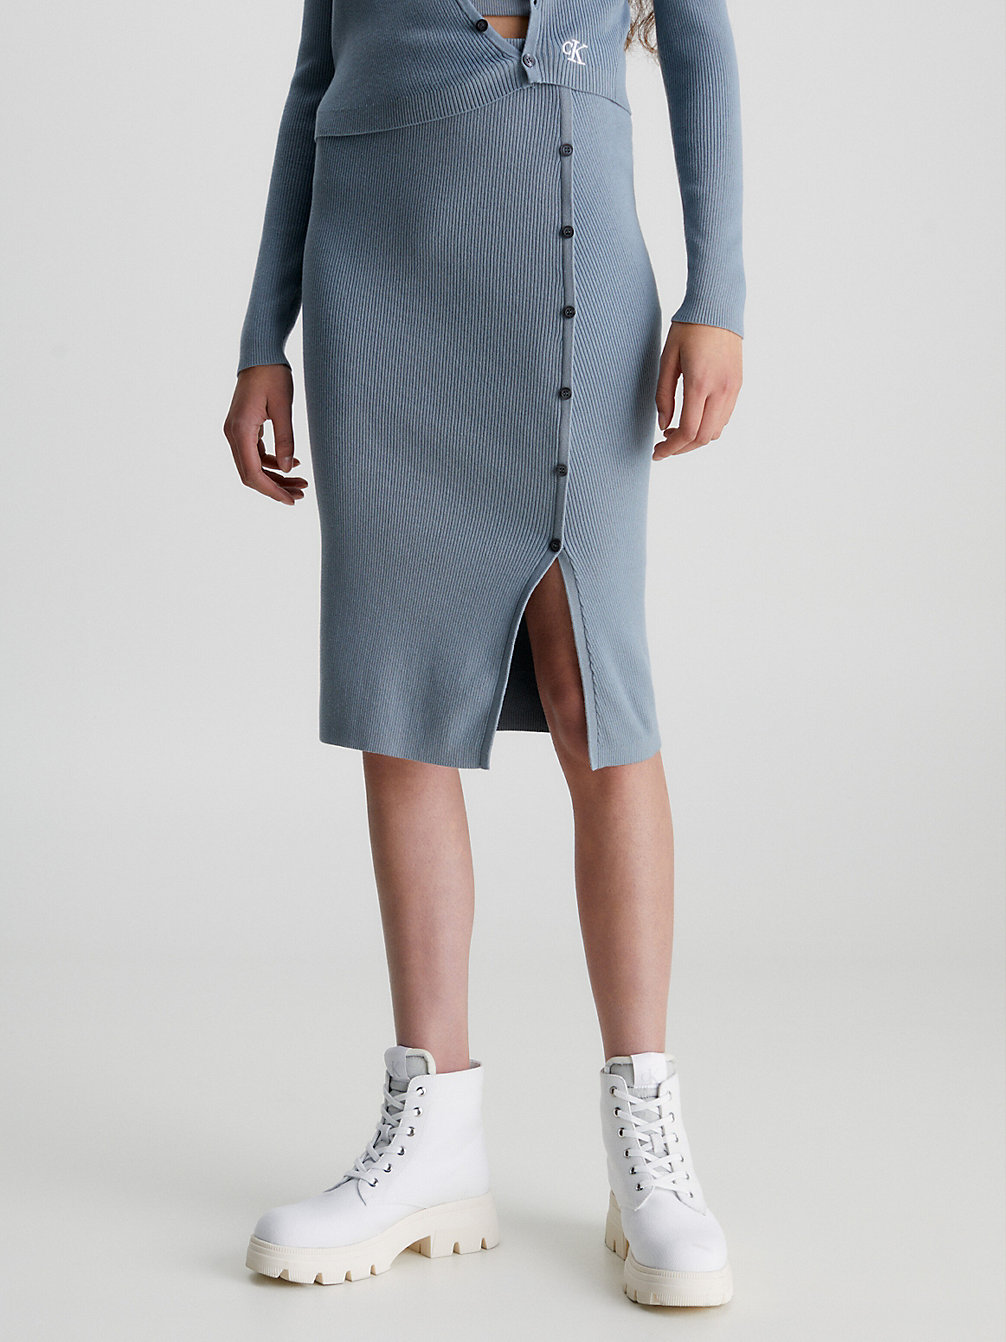 OVERCAST GREY Organic Cotton Pencil Skirt undefined women Calvin Klein